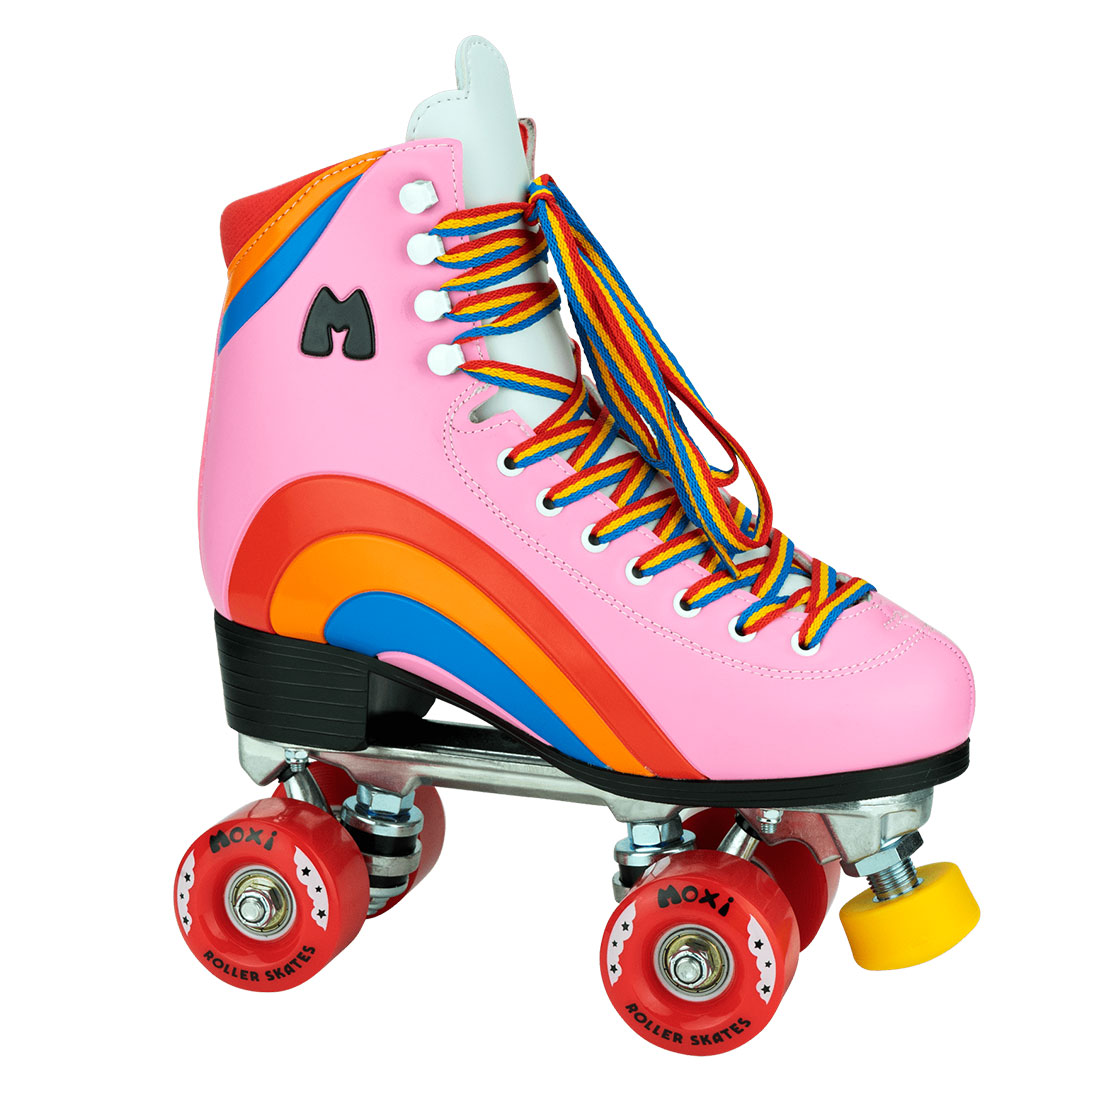 Moxi Rainbow Rider - Pink Heart Roller Skates